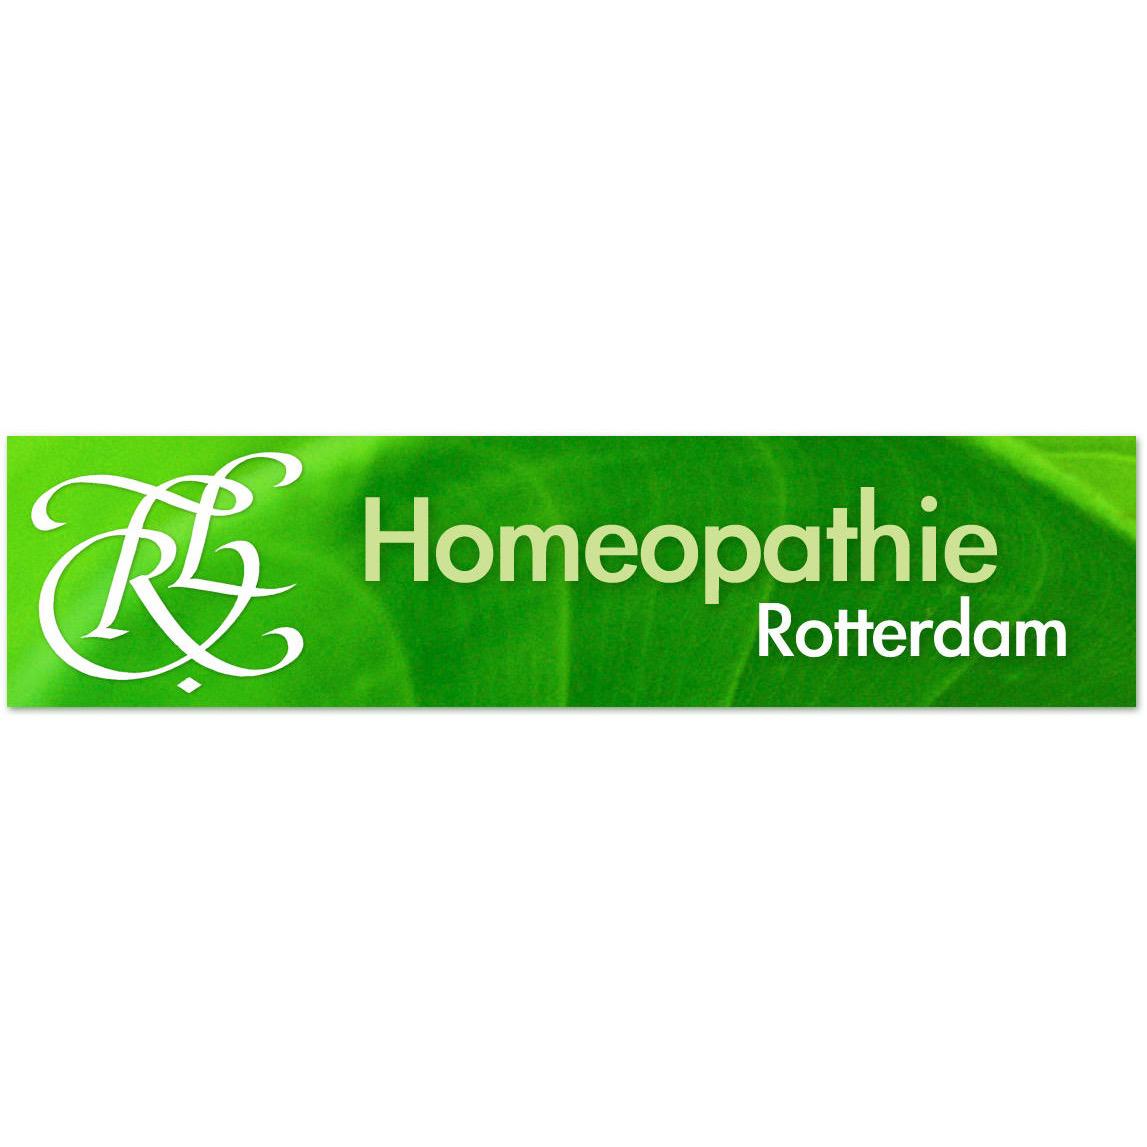 Homeopathie Rotterdam - R de Landmeter - Homeopath - Rotterdam - 010 422 2700 Netherlands | ShowMeLocal.com